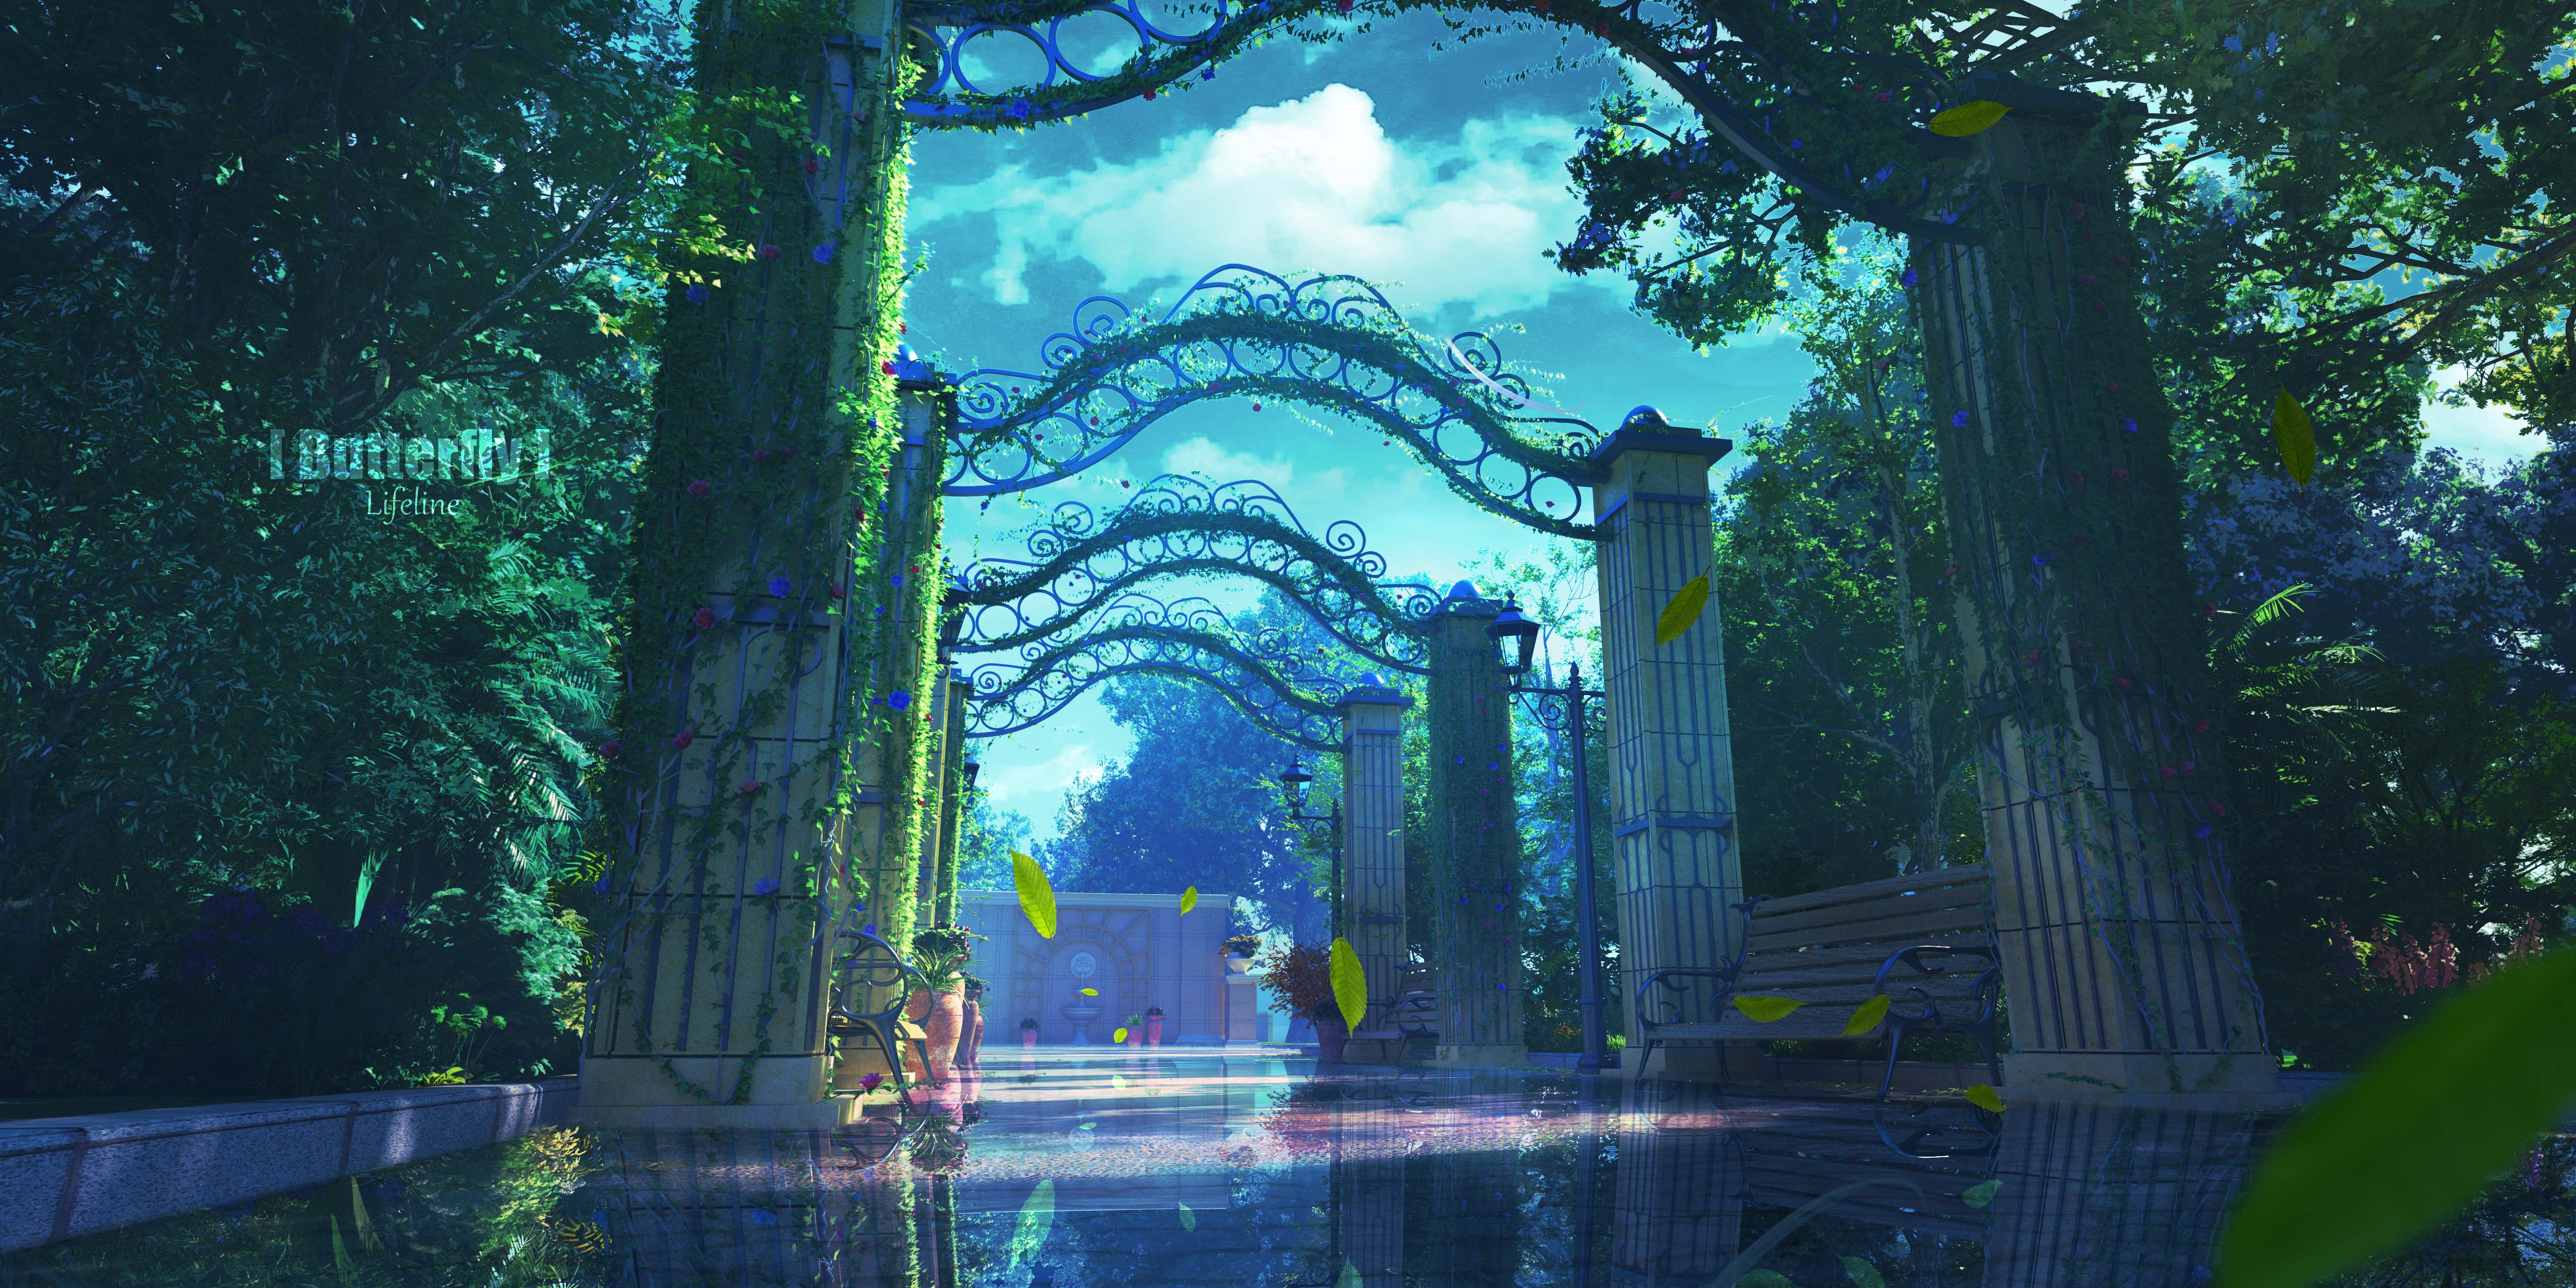 Environment Abstract Garden Digital Digital Art Artwork Illustration Anime Lifeline Reflection Cloud 5000x2500